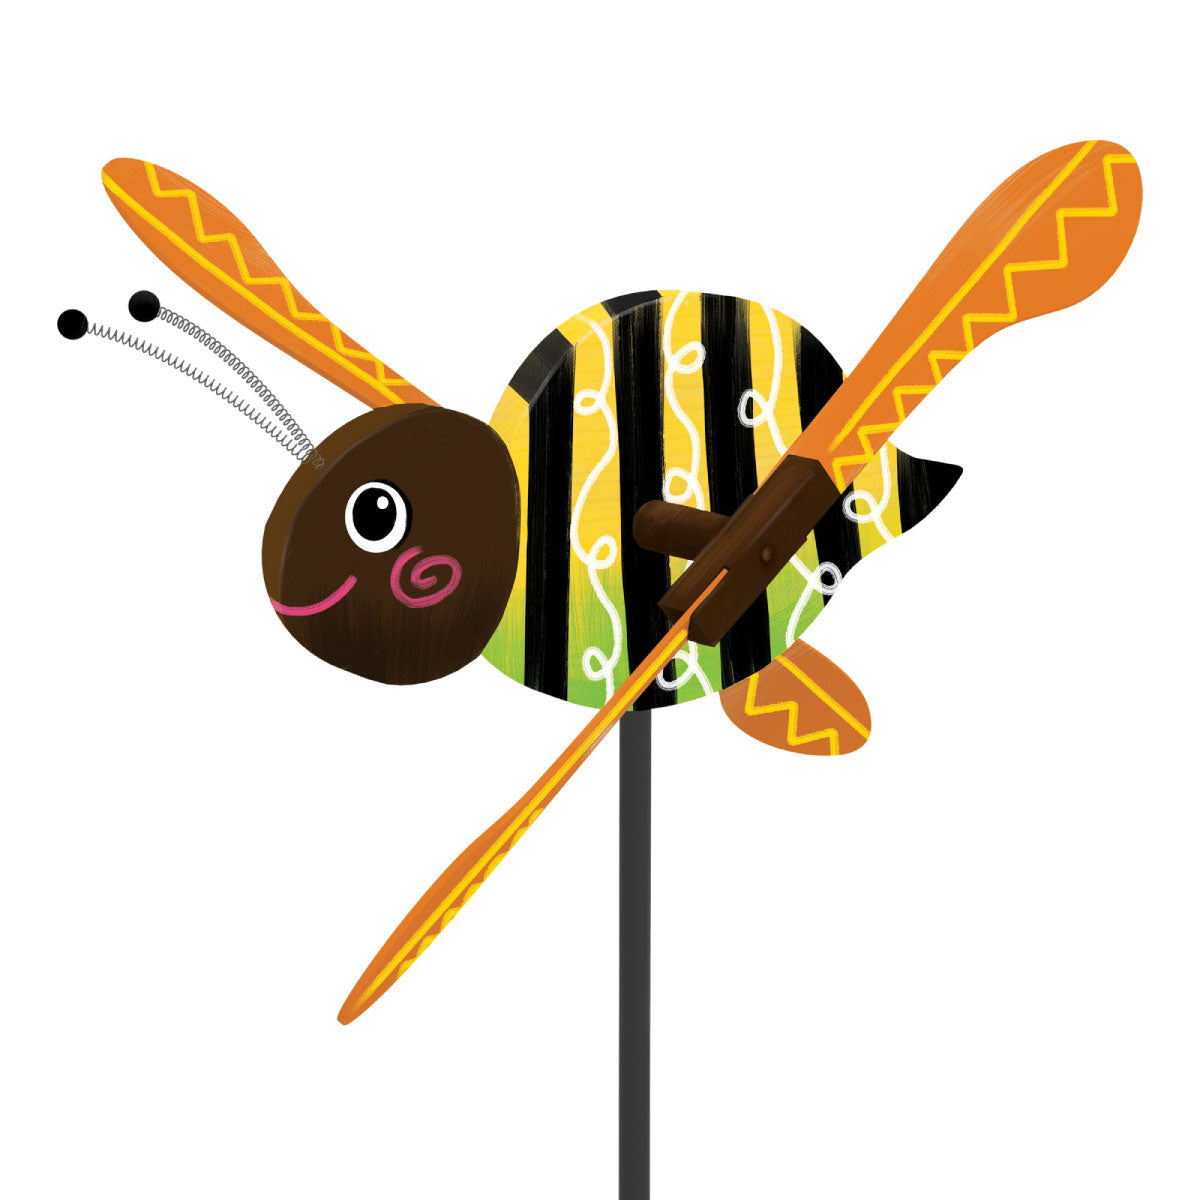 Mindware MYO Bumble Bee Wind Spinner Craft Kit